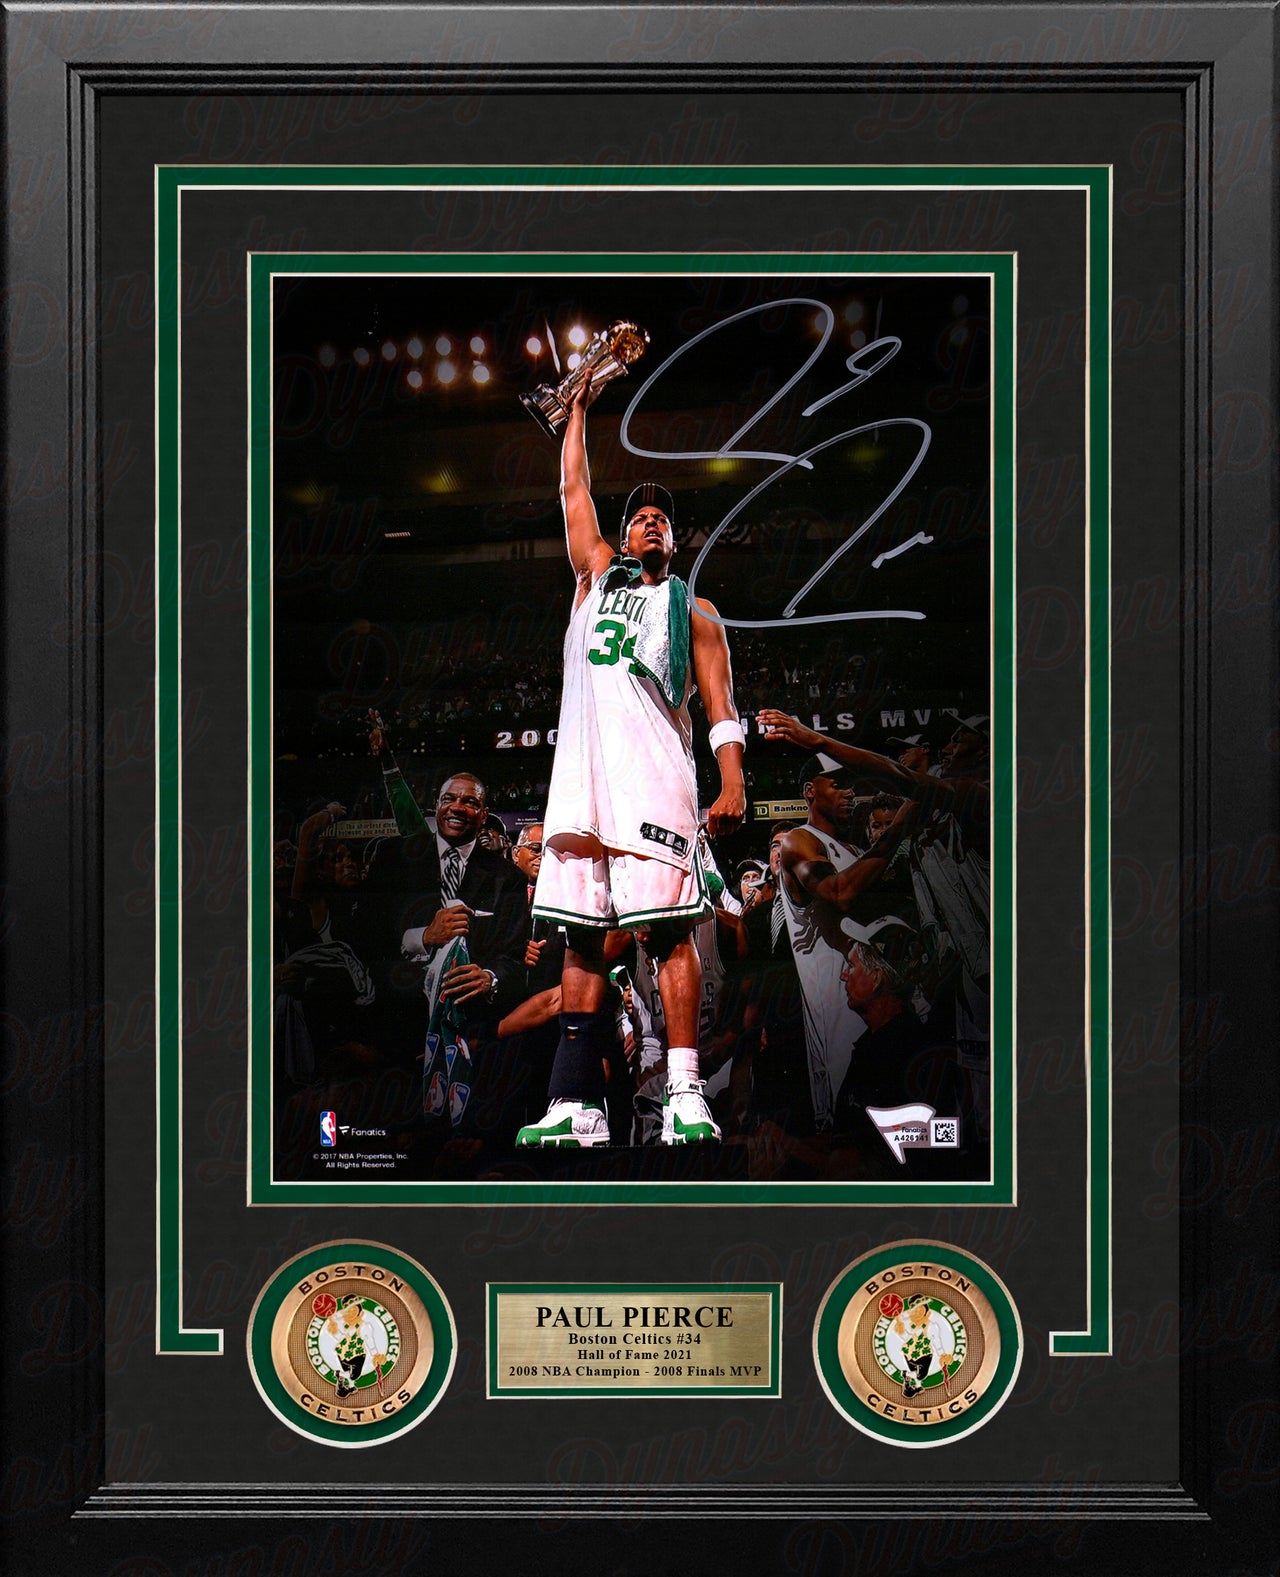 Paul Pierce Kevin Garnett Ray Allen Photo NBA Champions 2008 16x20